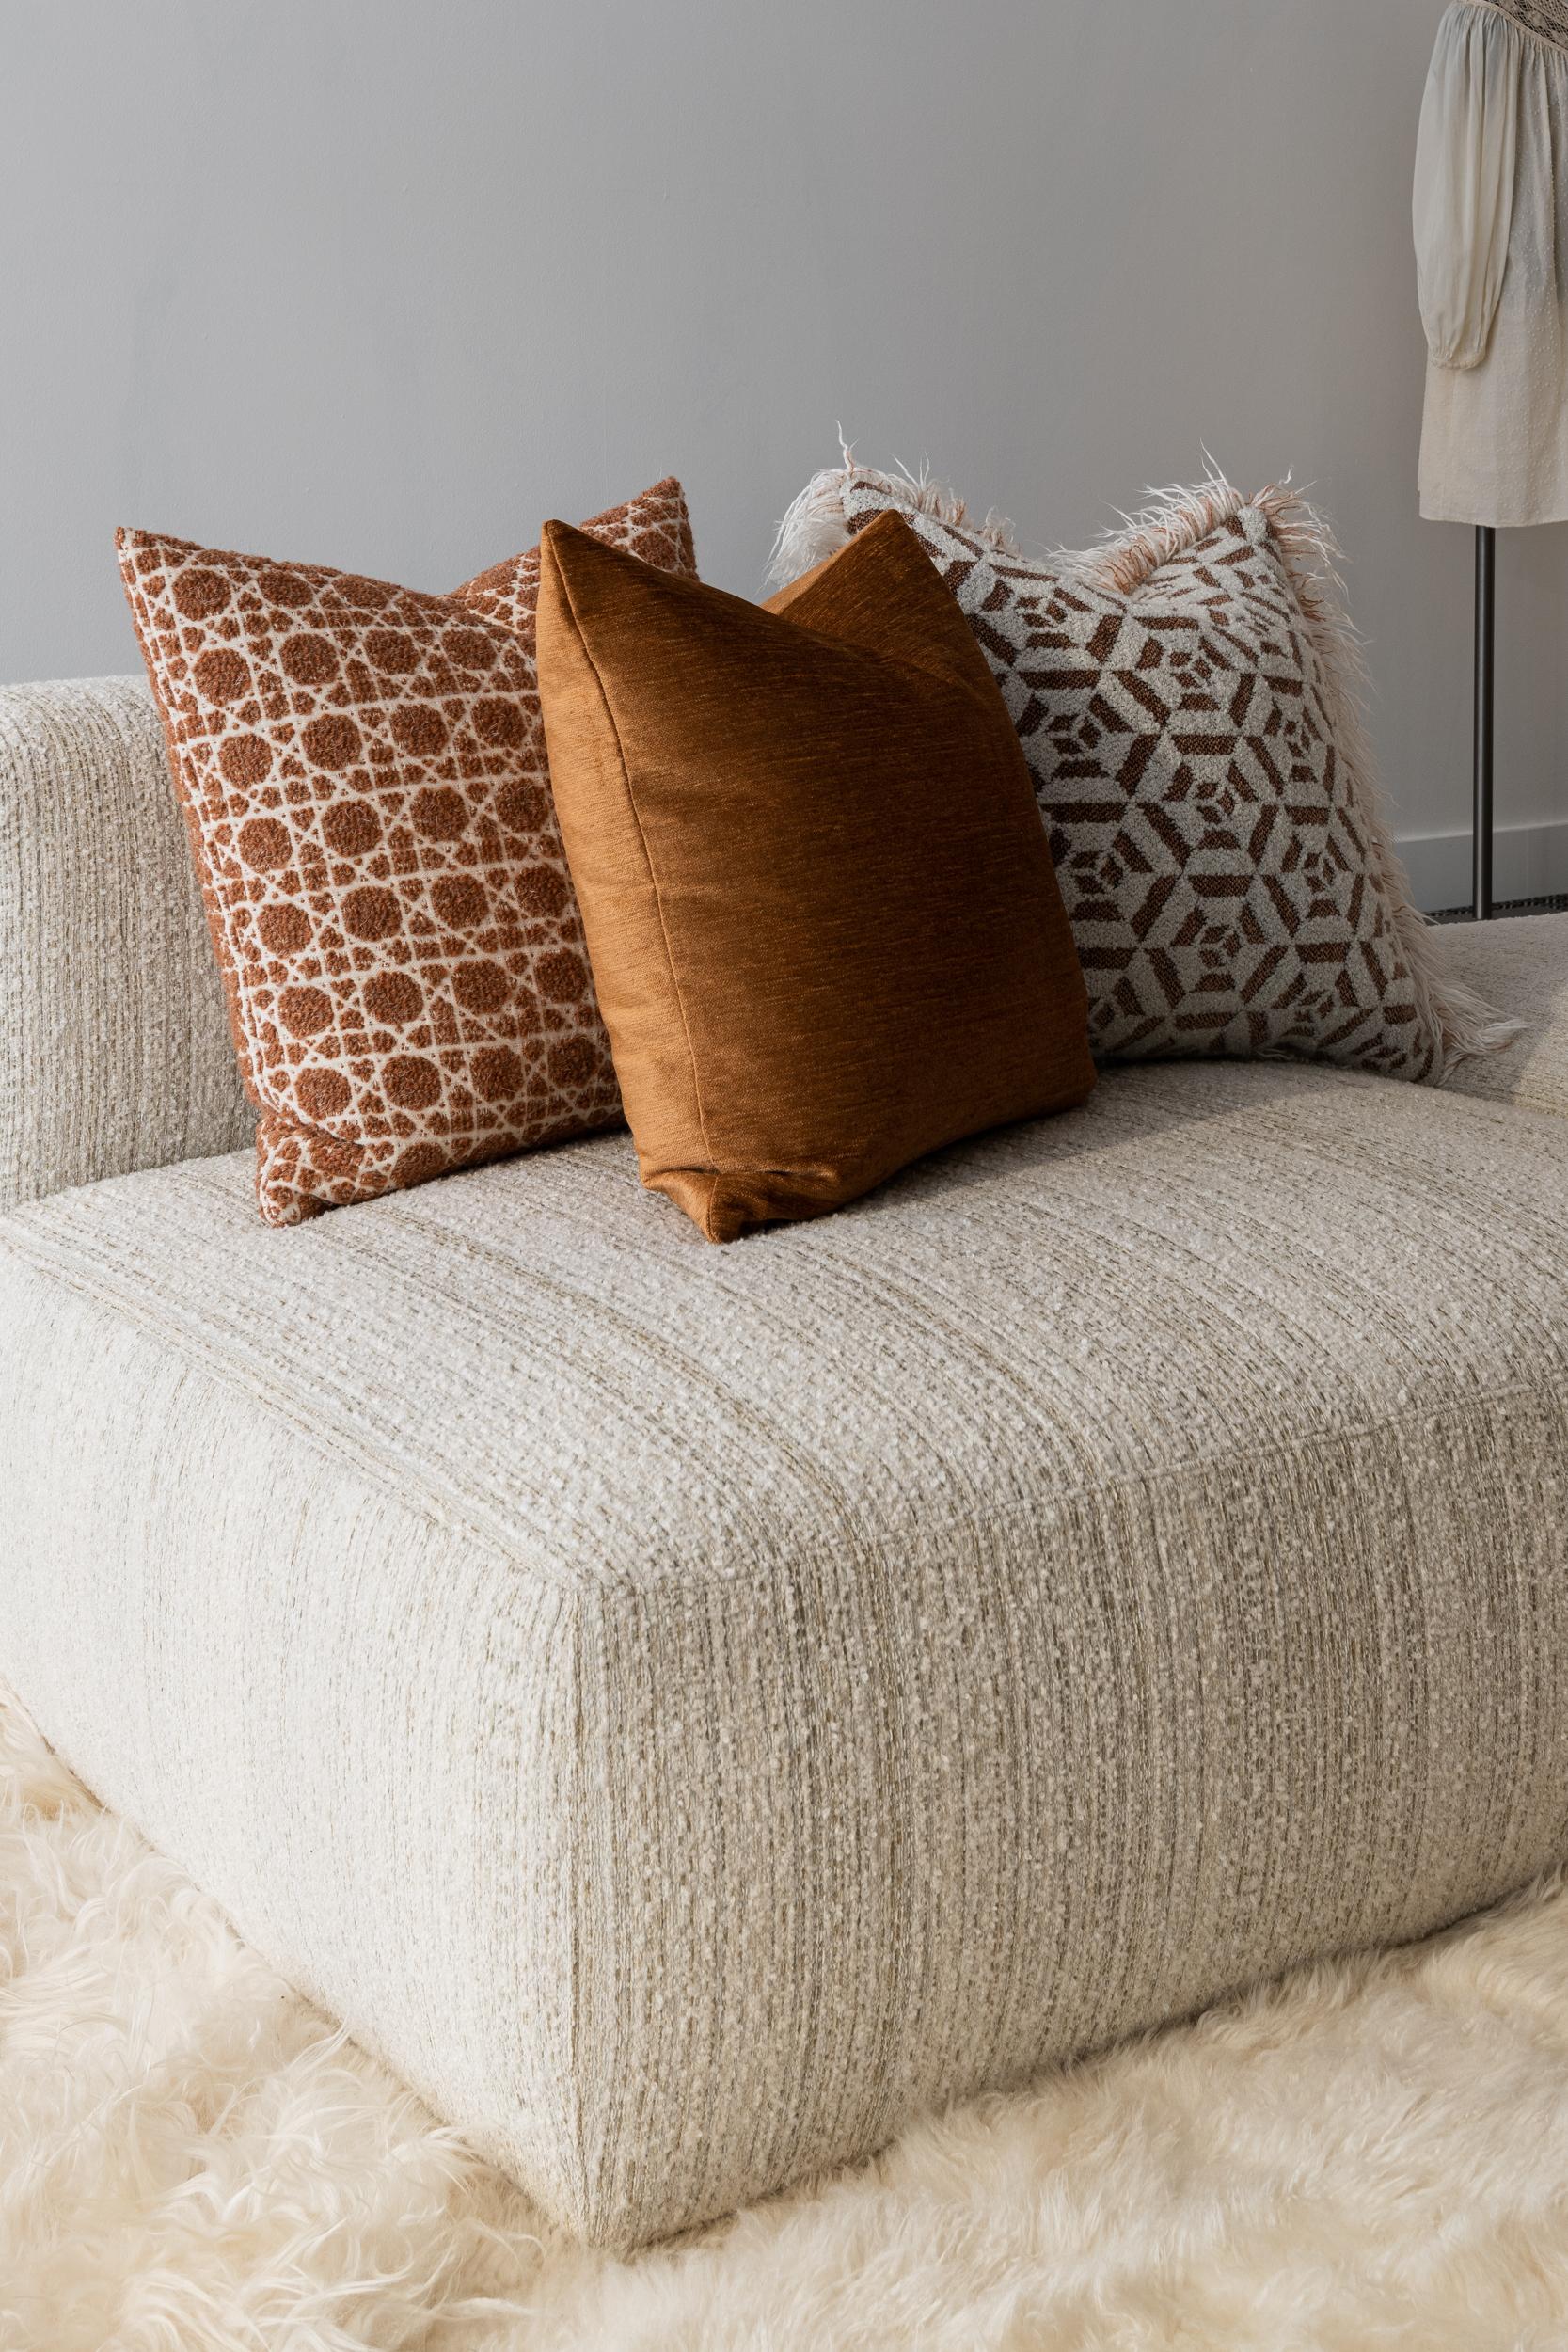 Belgian Modern Textured Patterned Throw Pillow Pink 